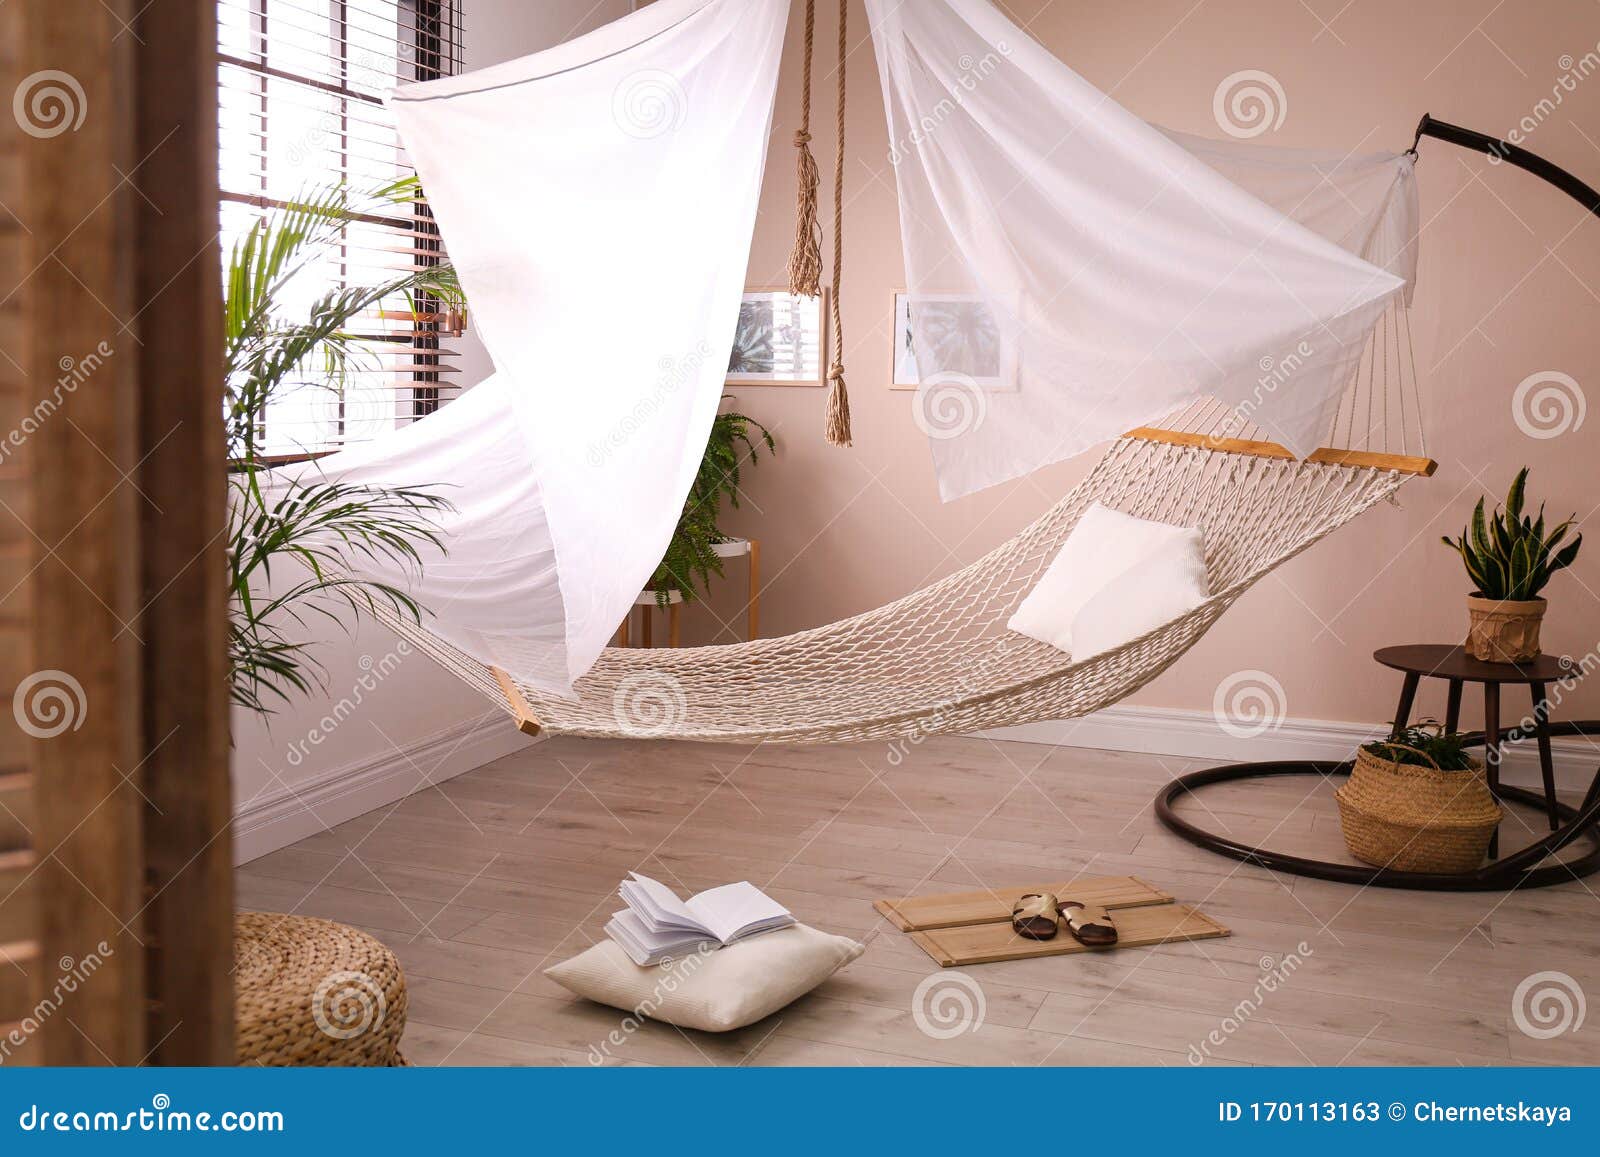 Comfortable Hammock in Room. Interior Design Stock Image - Image